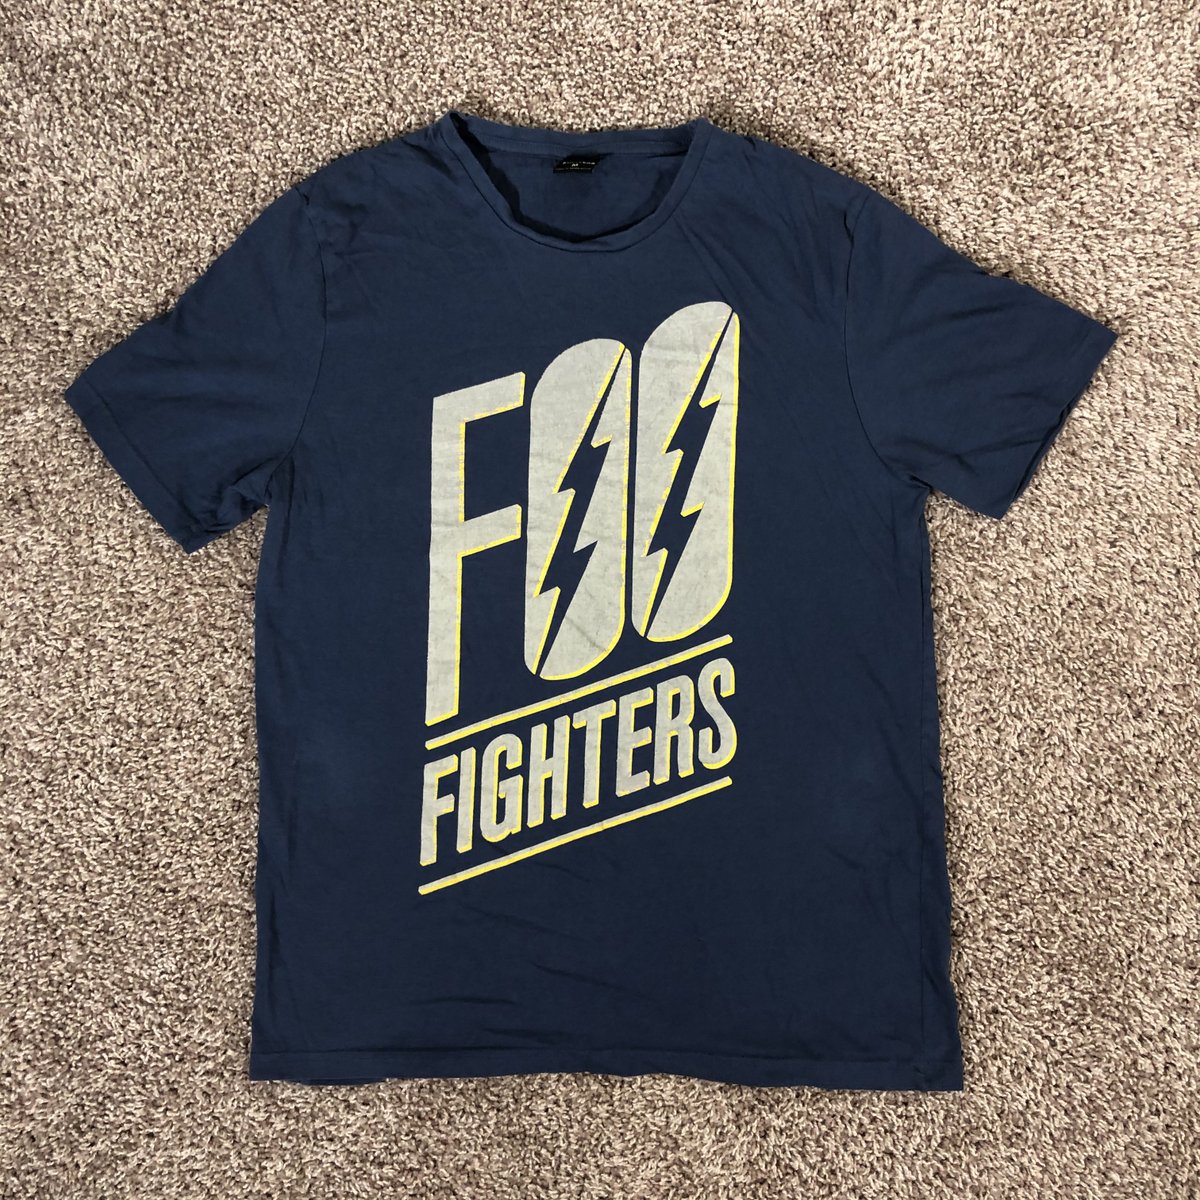 Foo Fighters T Shirt Licensed 2016, Size Medium #foofighters #davegrohl #nirvana #rock #grunge #rocknroll #davegrohlismyhero #seattle #FooFighters #FooFightersFan #Music #2016 #TShirt #BandTShirt #Ebay #EbaySeller #Reseller #NorthCarolina #NC #RDU #RaleighThrowback